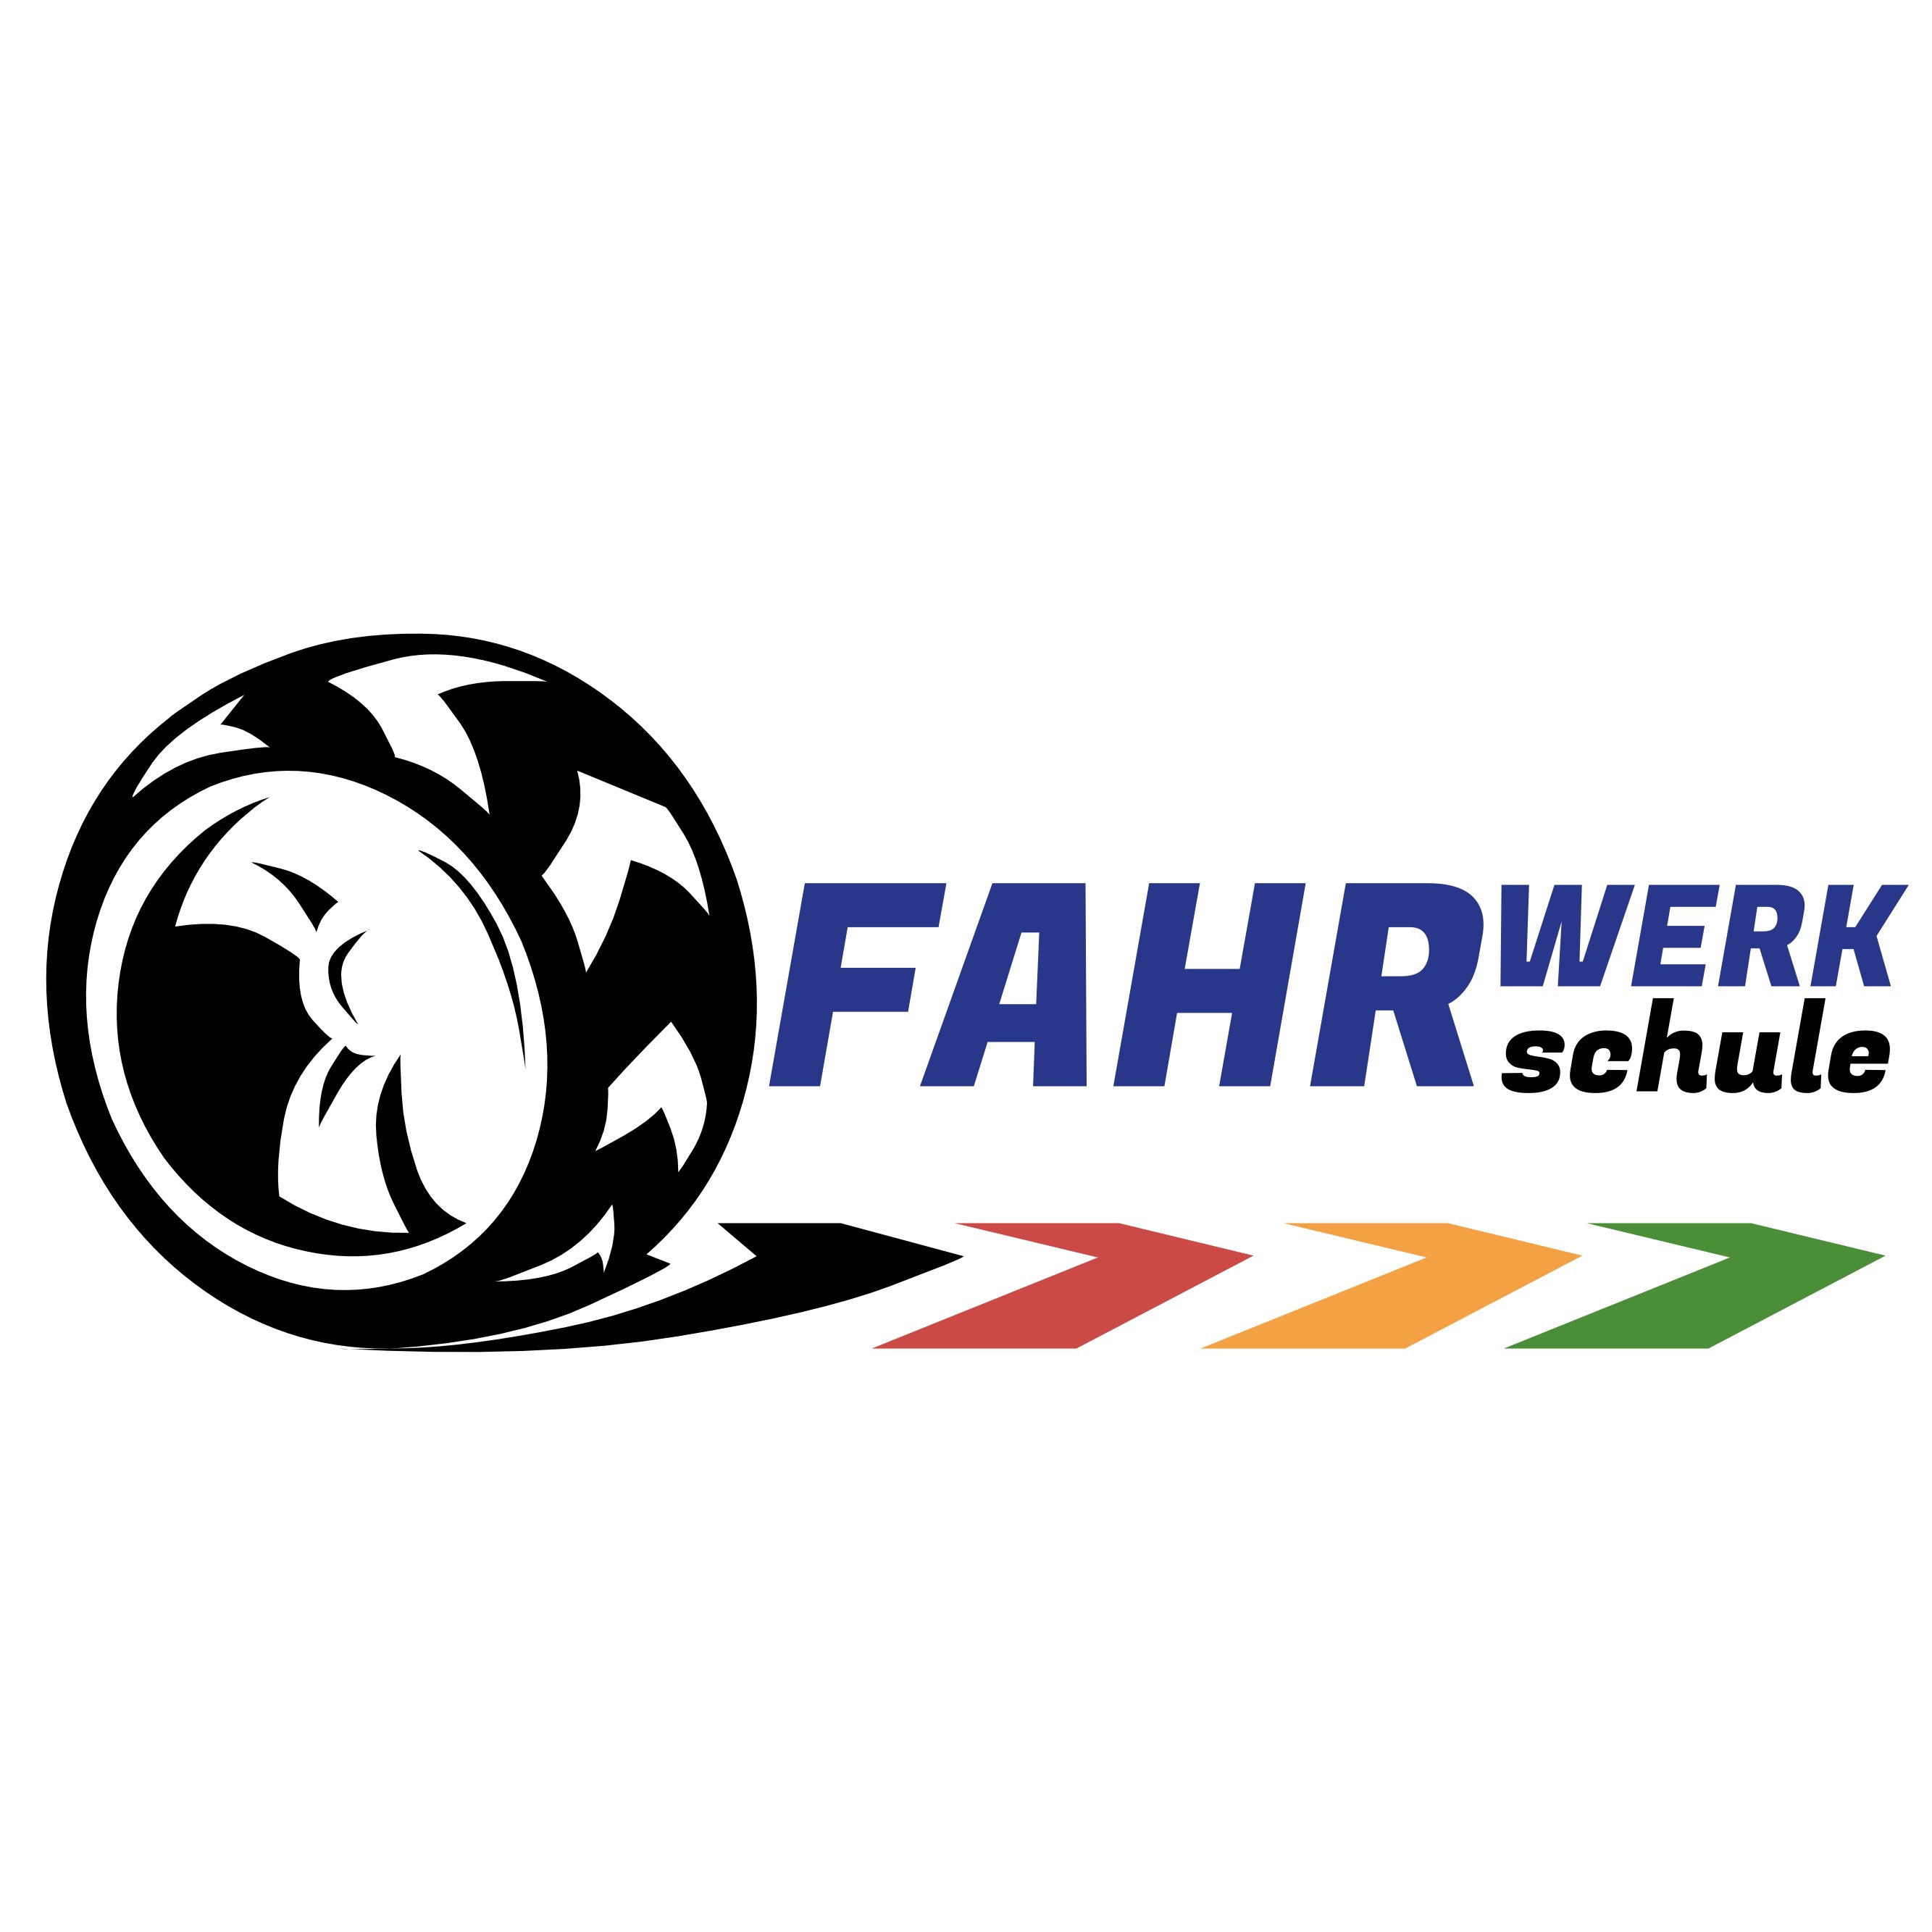 Fahrschule Fahrwerk GmbH Heroldsbach 09543 4407715